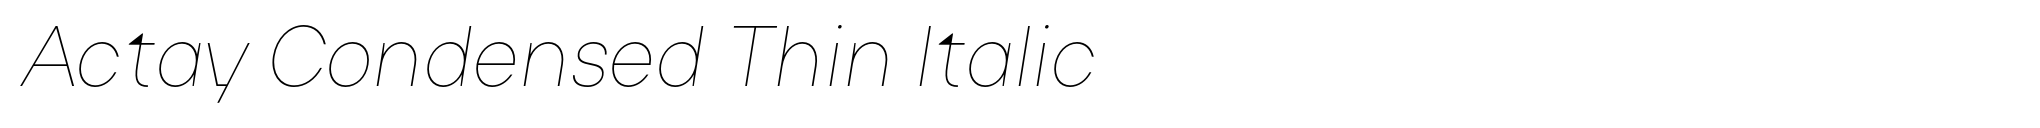 Actay Condensed Thin Italic image